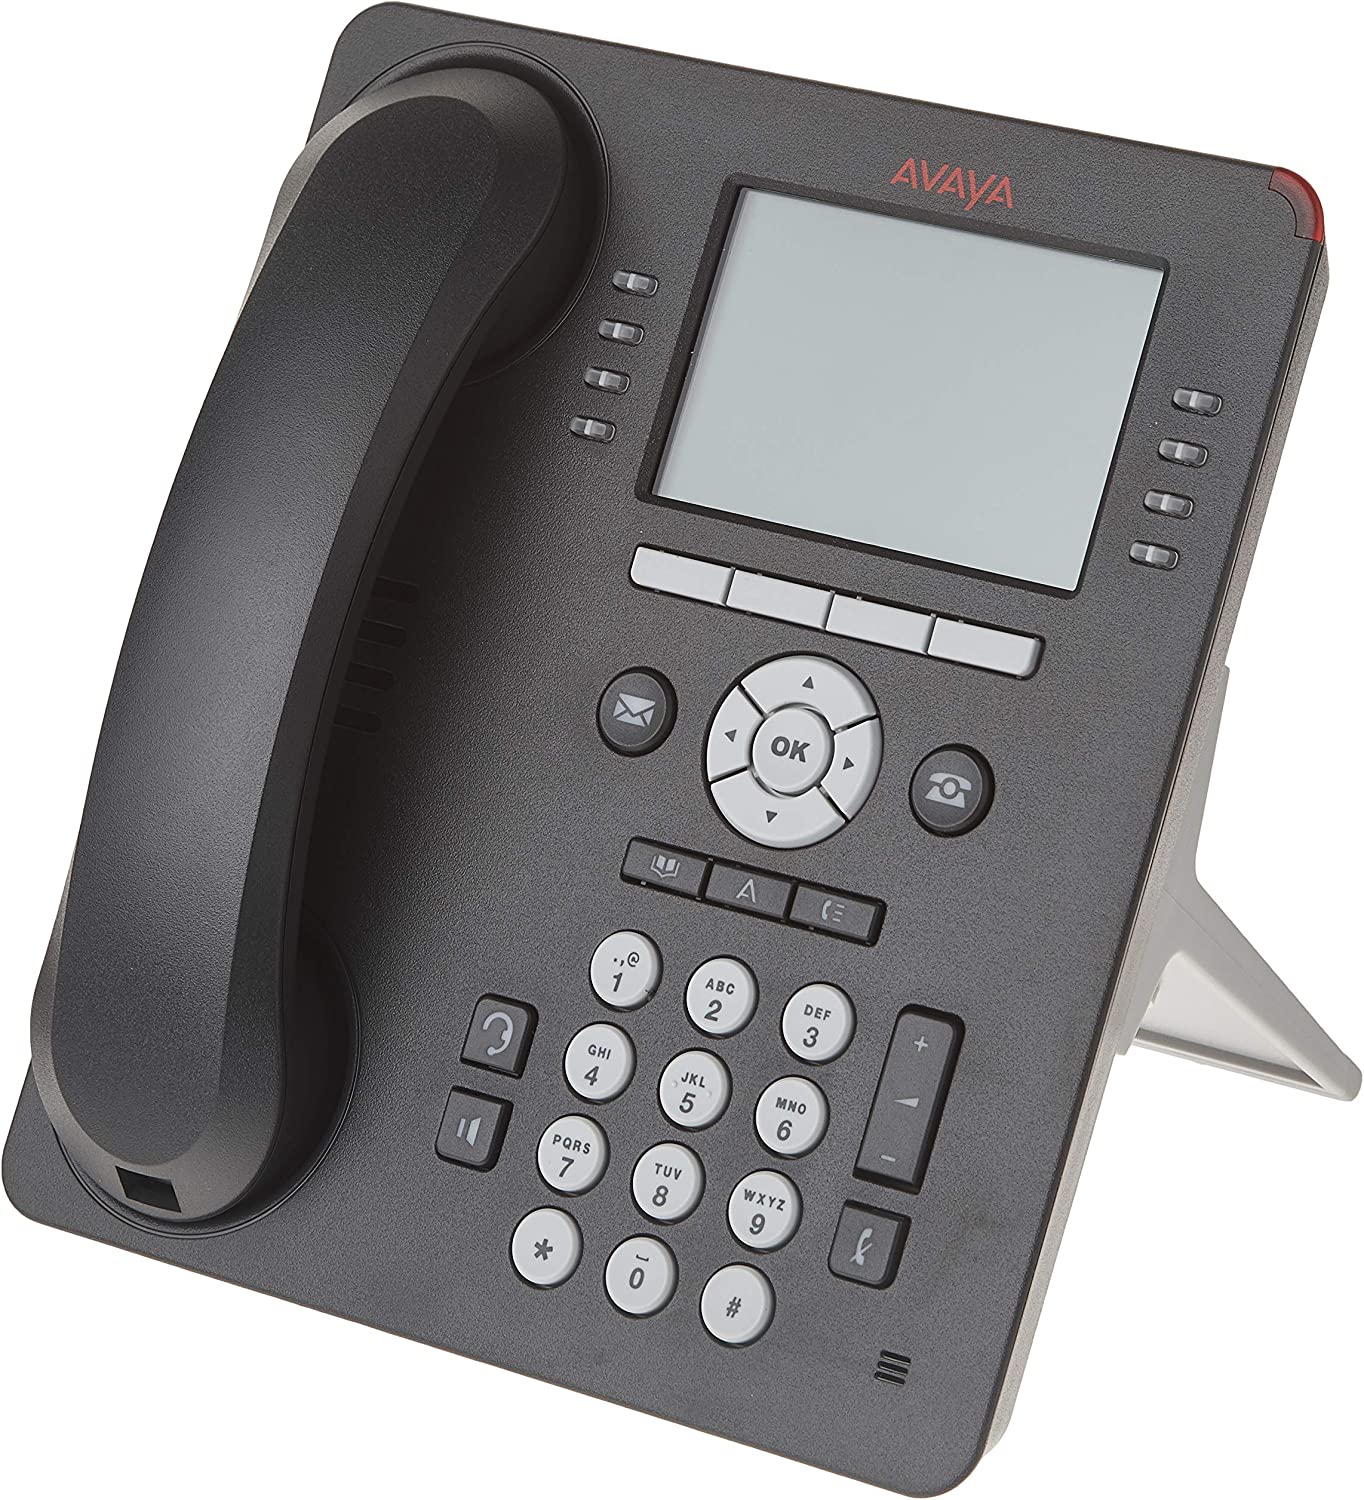 AVAYA IP OFFICE DIGITAL TELÉFONO DE ESCRITORIO - 700469851 modelo 1408